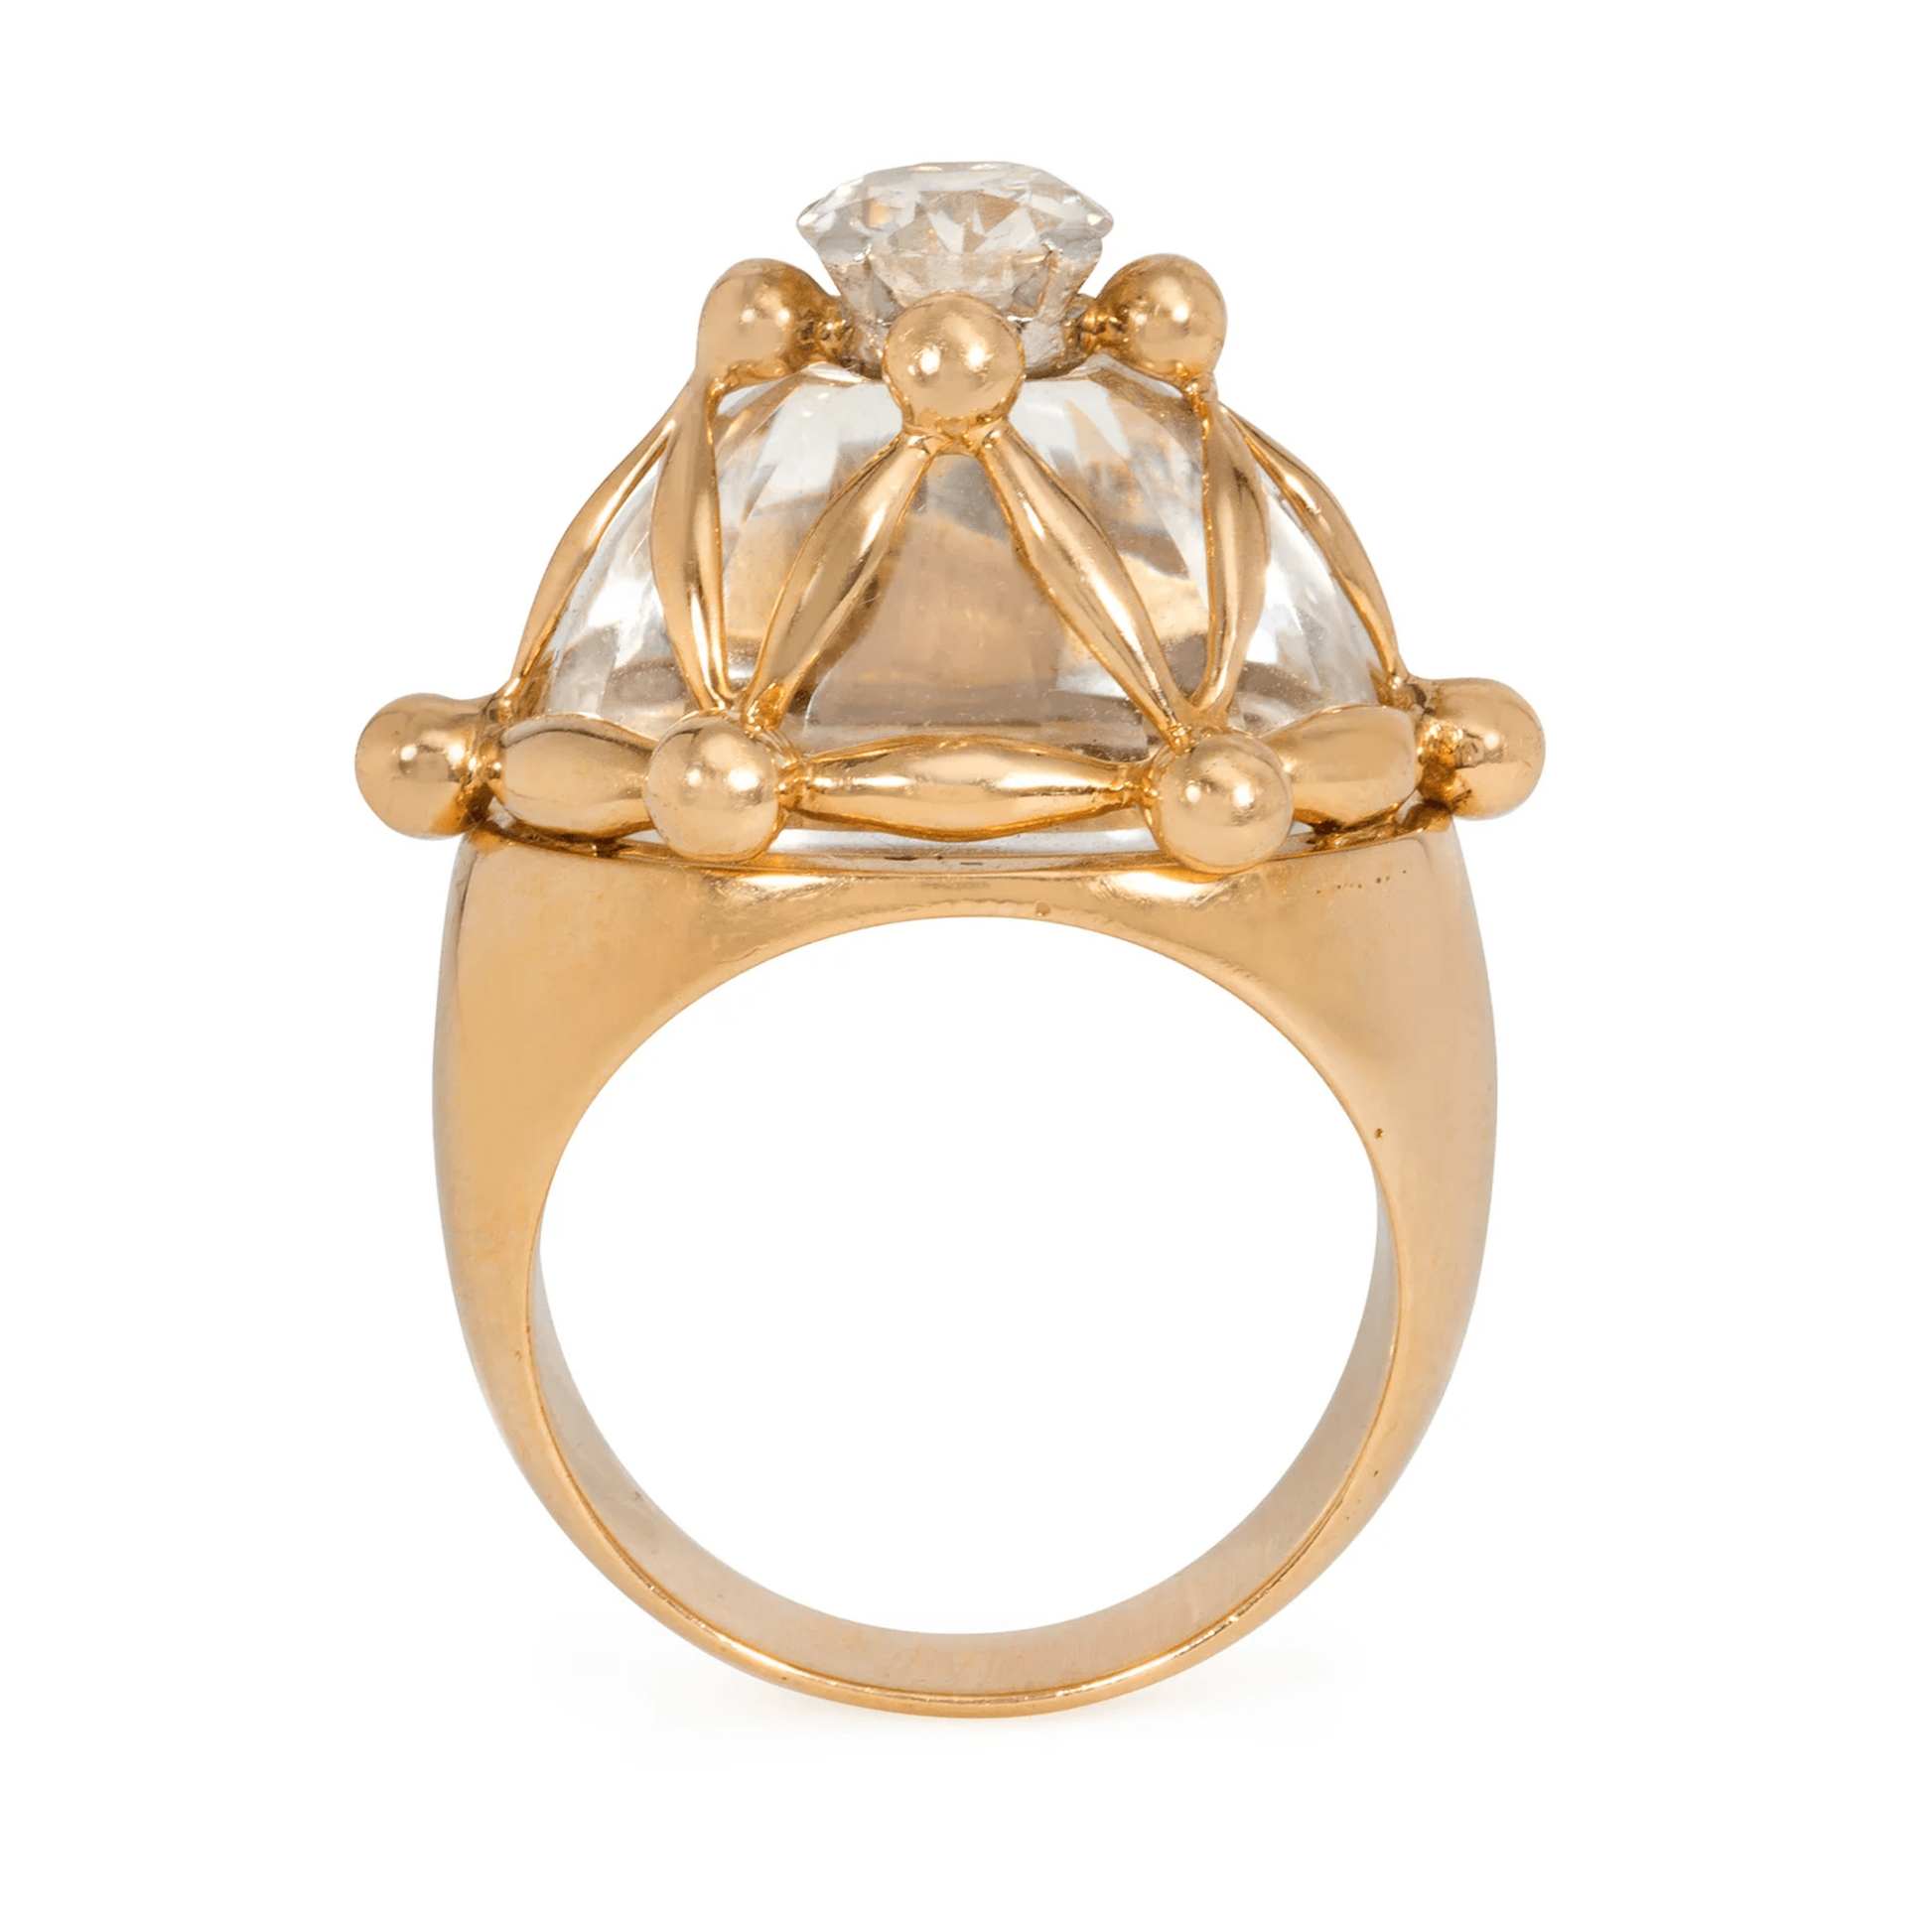 Raymond Topet French 1960s Platinum & 18KT Yellow Gold Diamond & Rock Crystal Ring profile